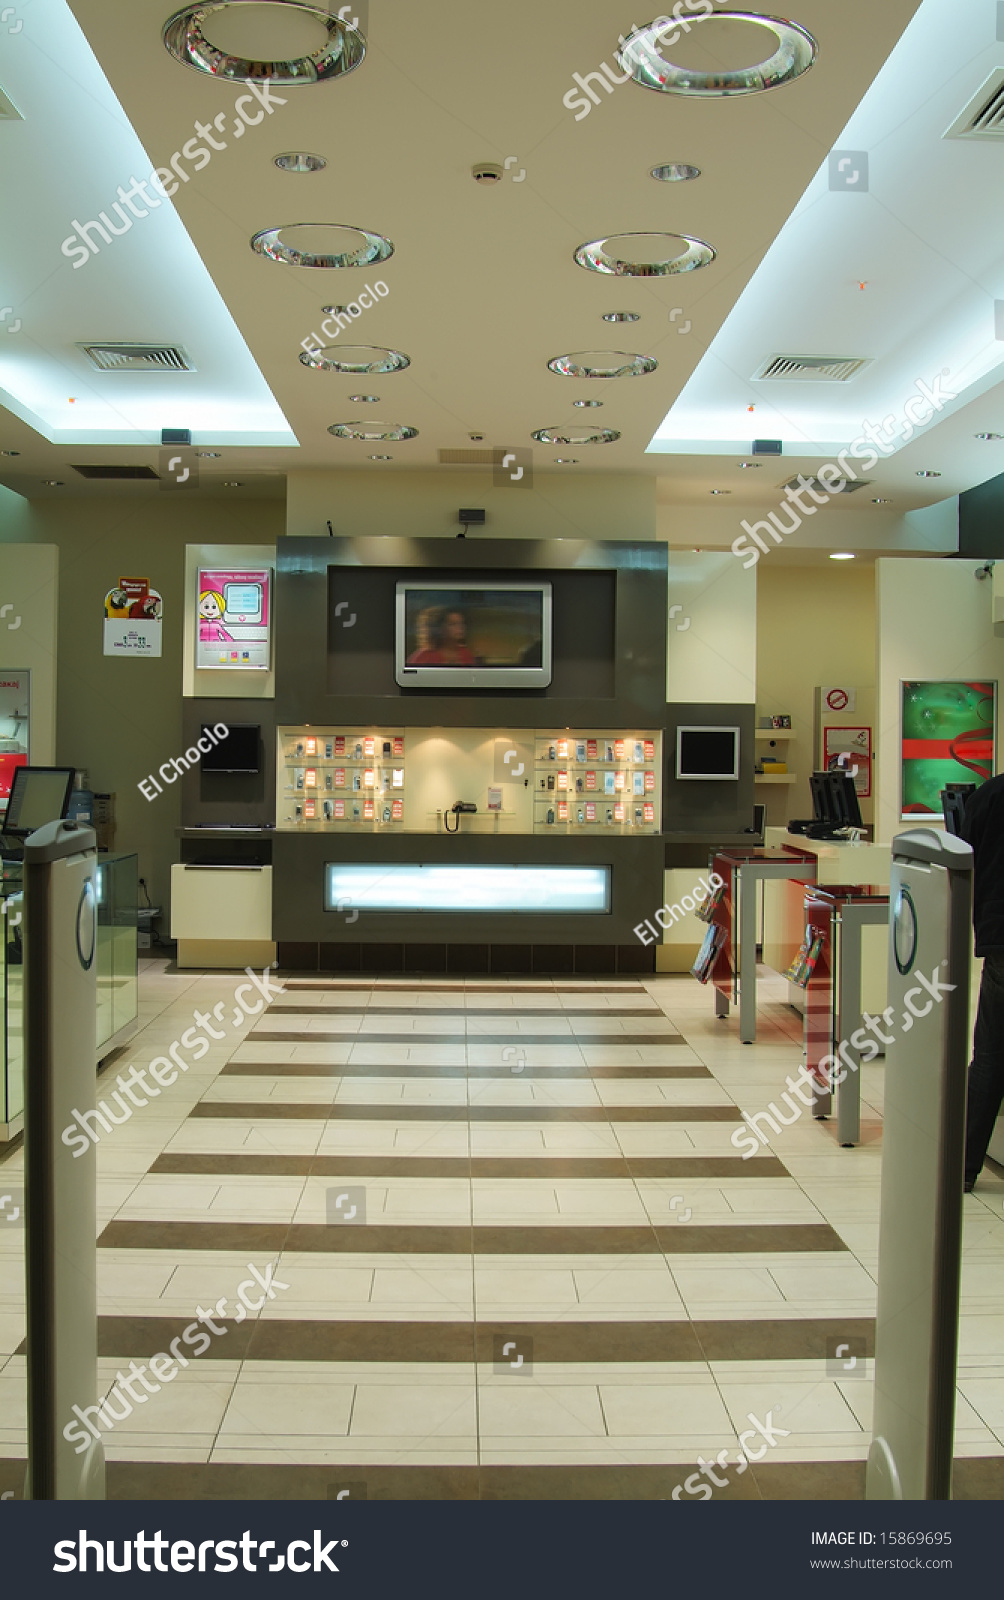 Modern Mobile Shop Interior Image Stock Image Download Now